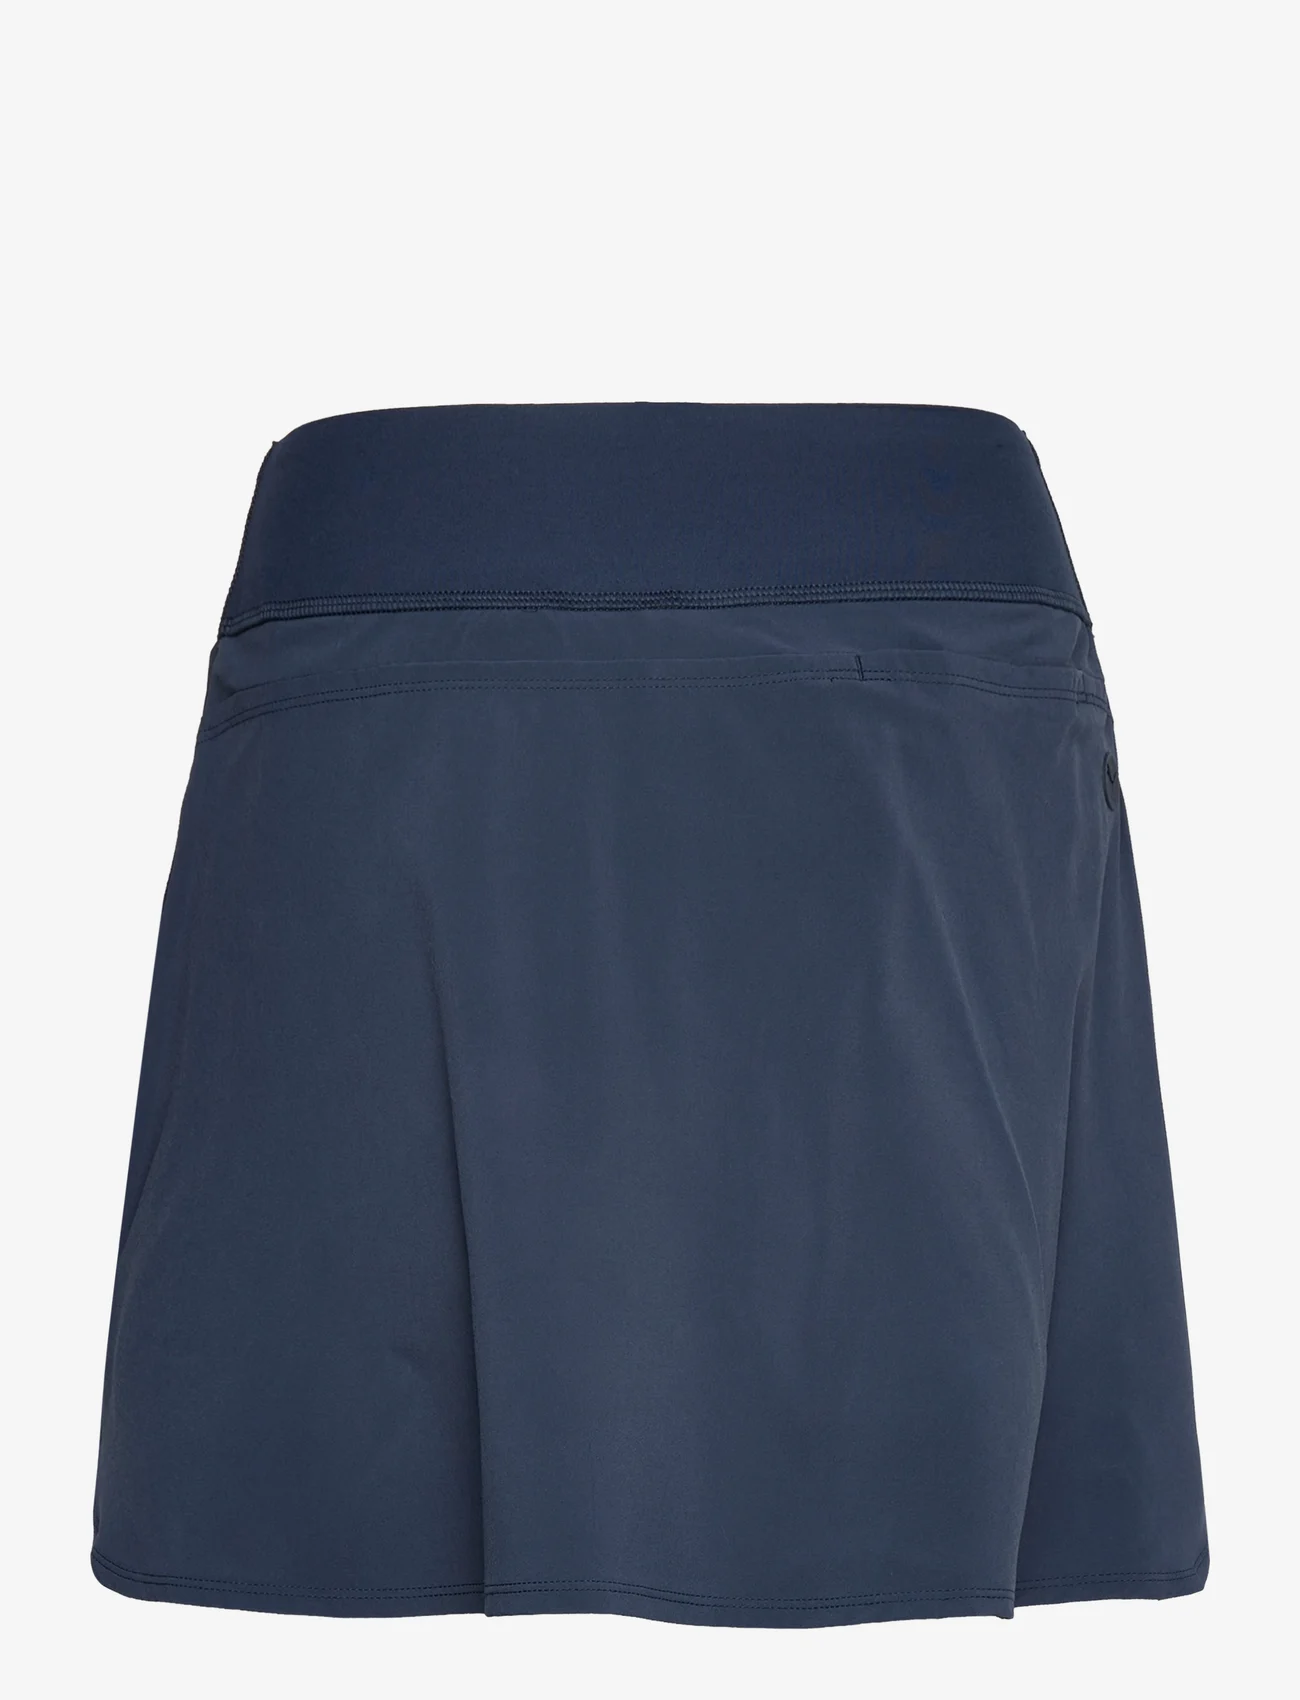 PUMA Golf - PWRSHAPE Solid Skirt - skirts - navy blazer - 1